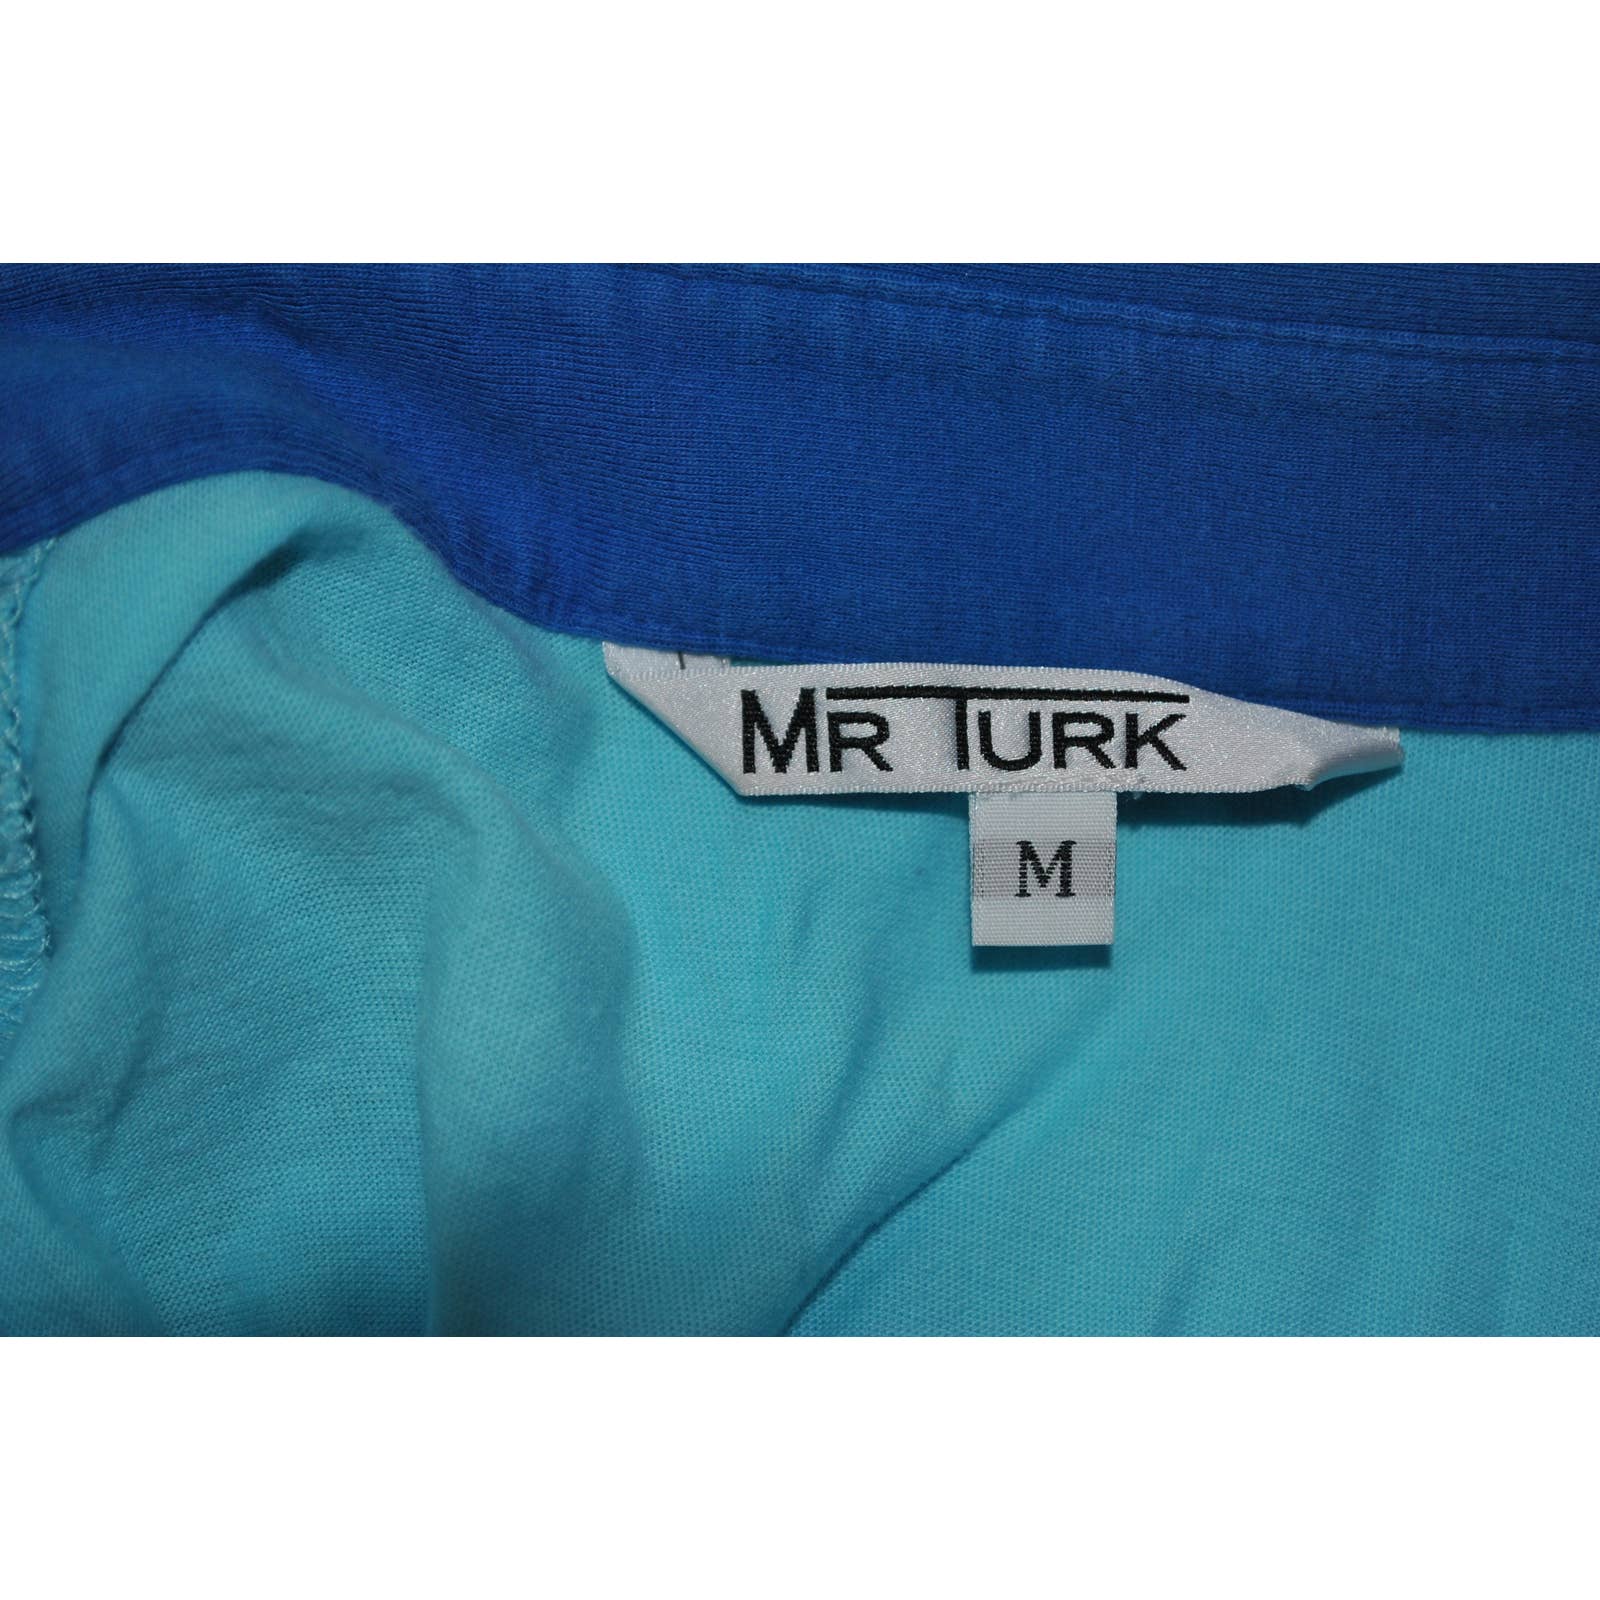 Mr Turk Blue on Blue Polo Shirt - M